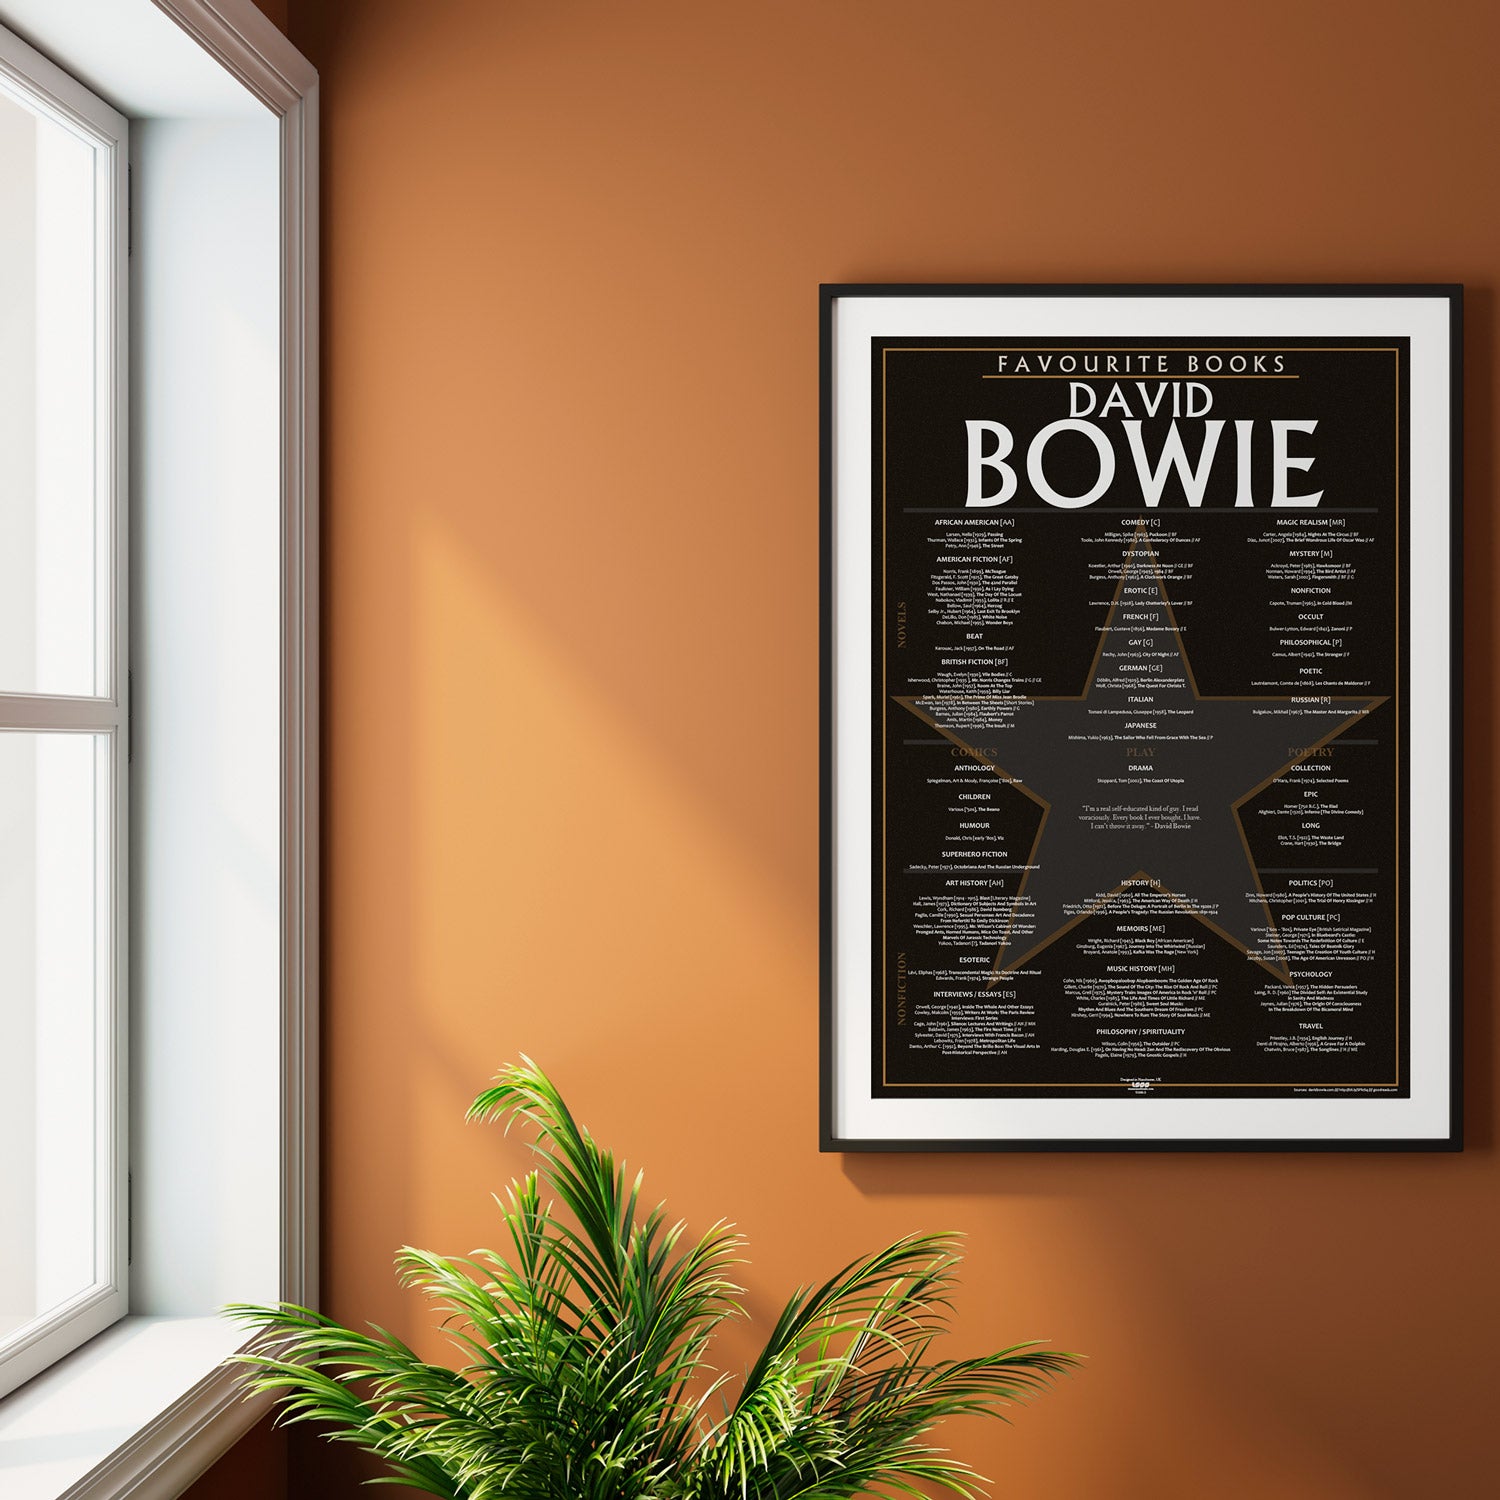 David Bowie's Favourite Books - The Sense of Doubt - David Bowie's Favourite Books - The Sense Of Doubt